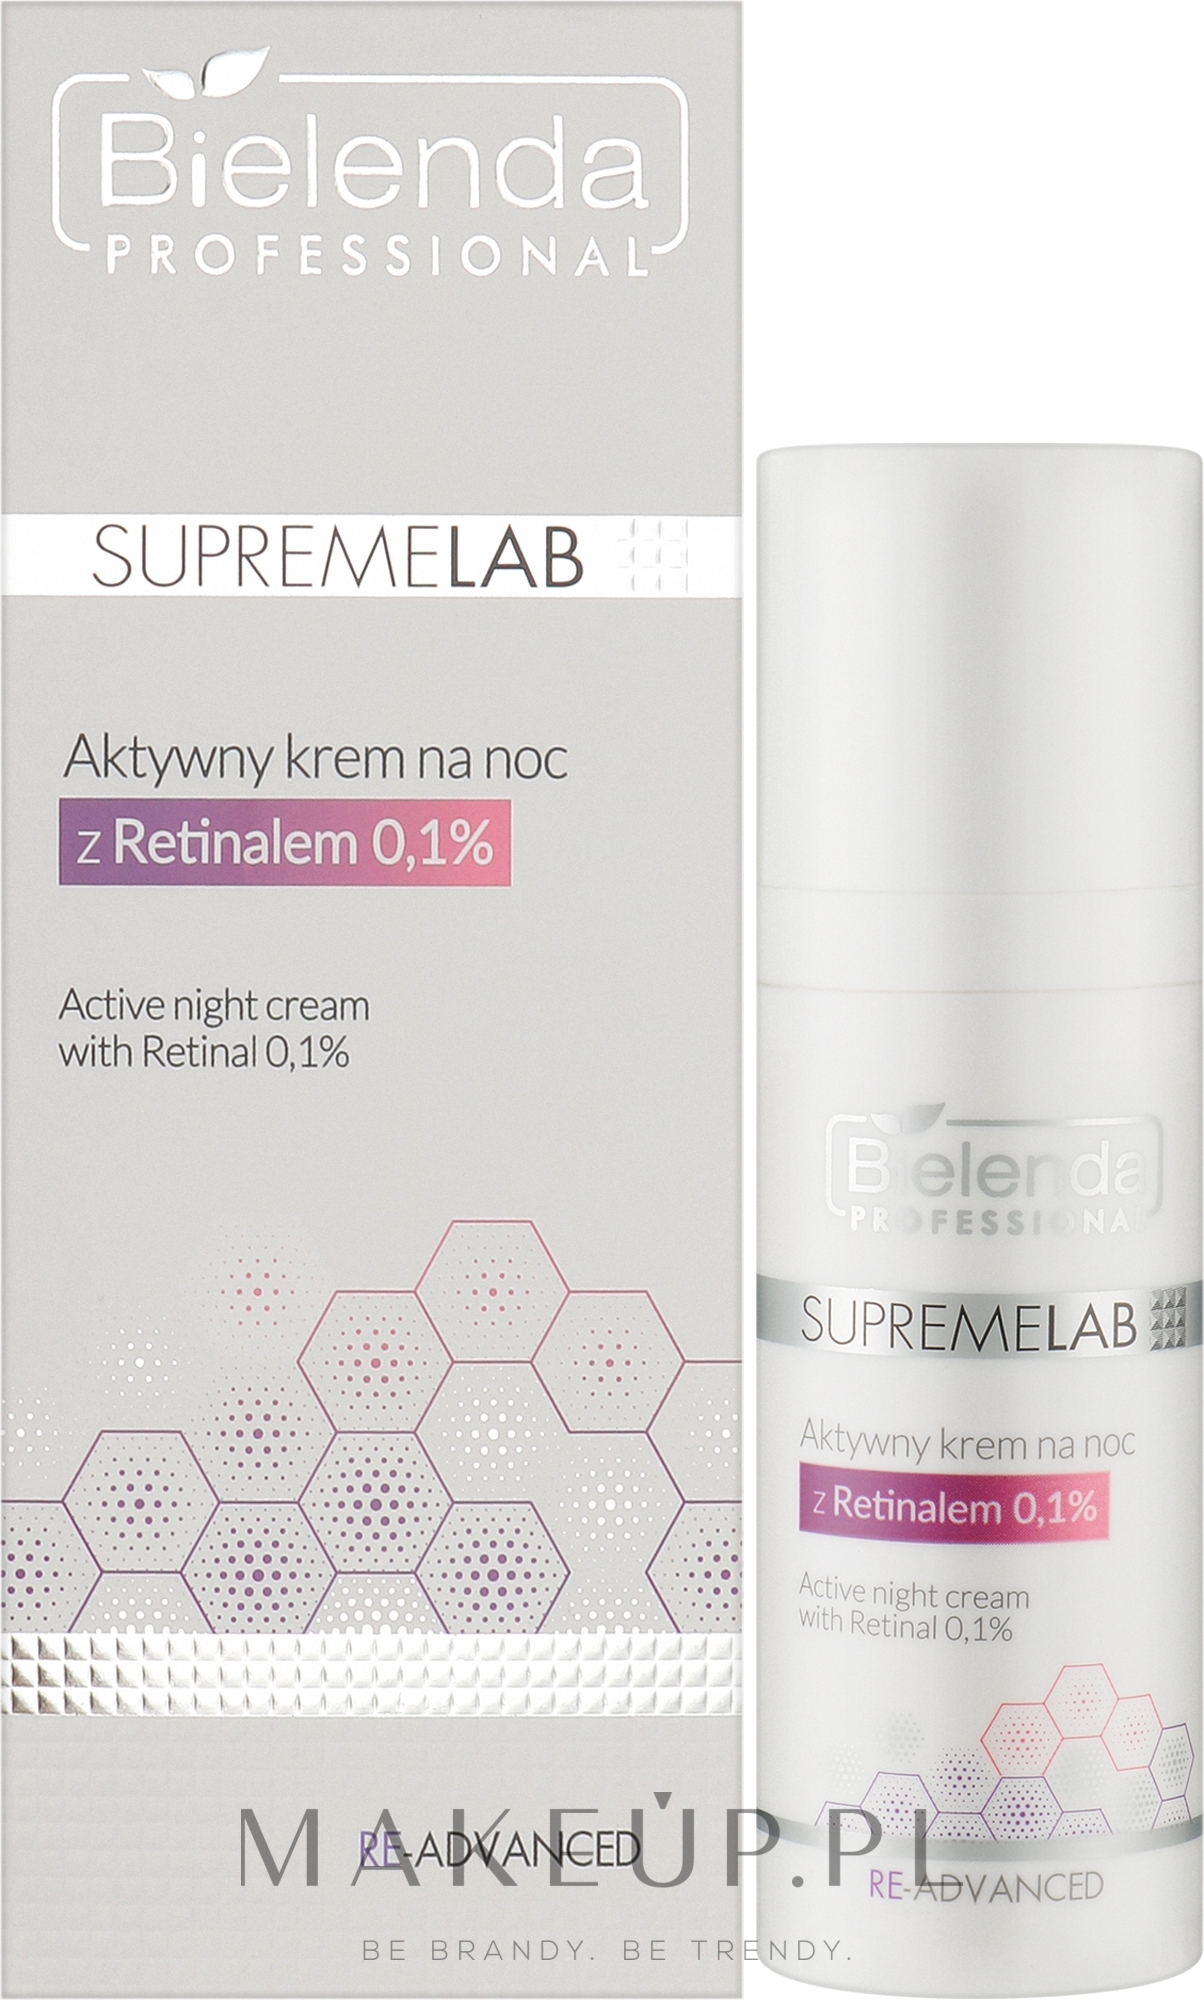 Bielenda Professional Supremelab Re-Advanced Active Night Cream